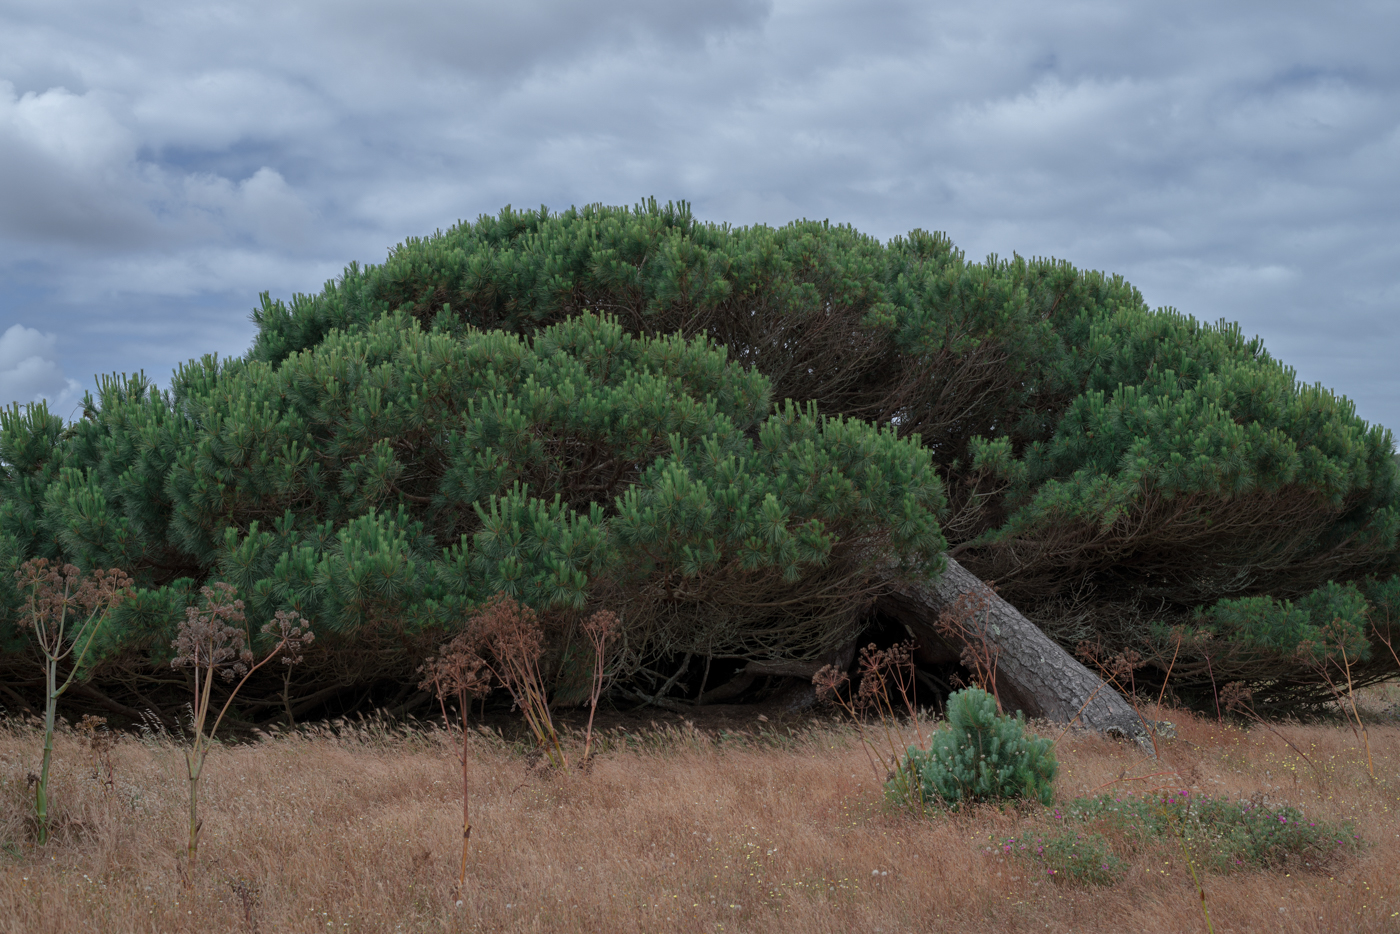 francois ollivier Travel Landscape explore Portugal france RoadTrip wander spain Nature